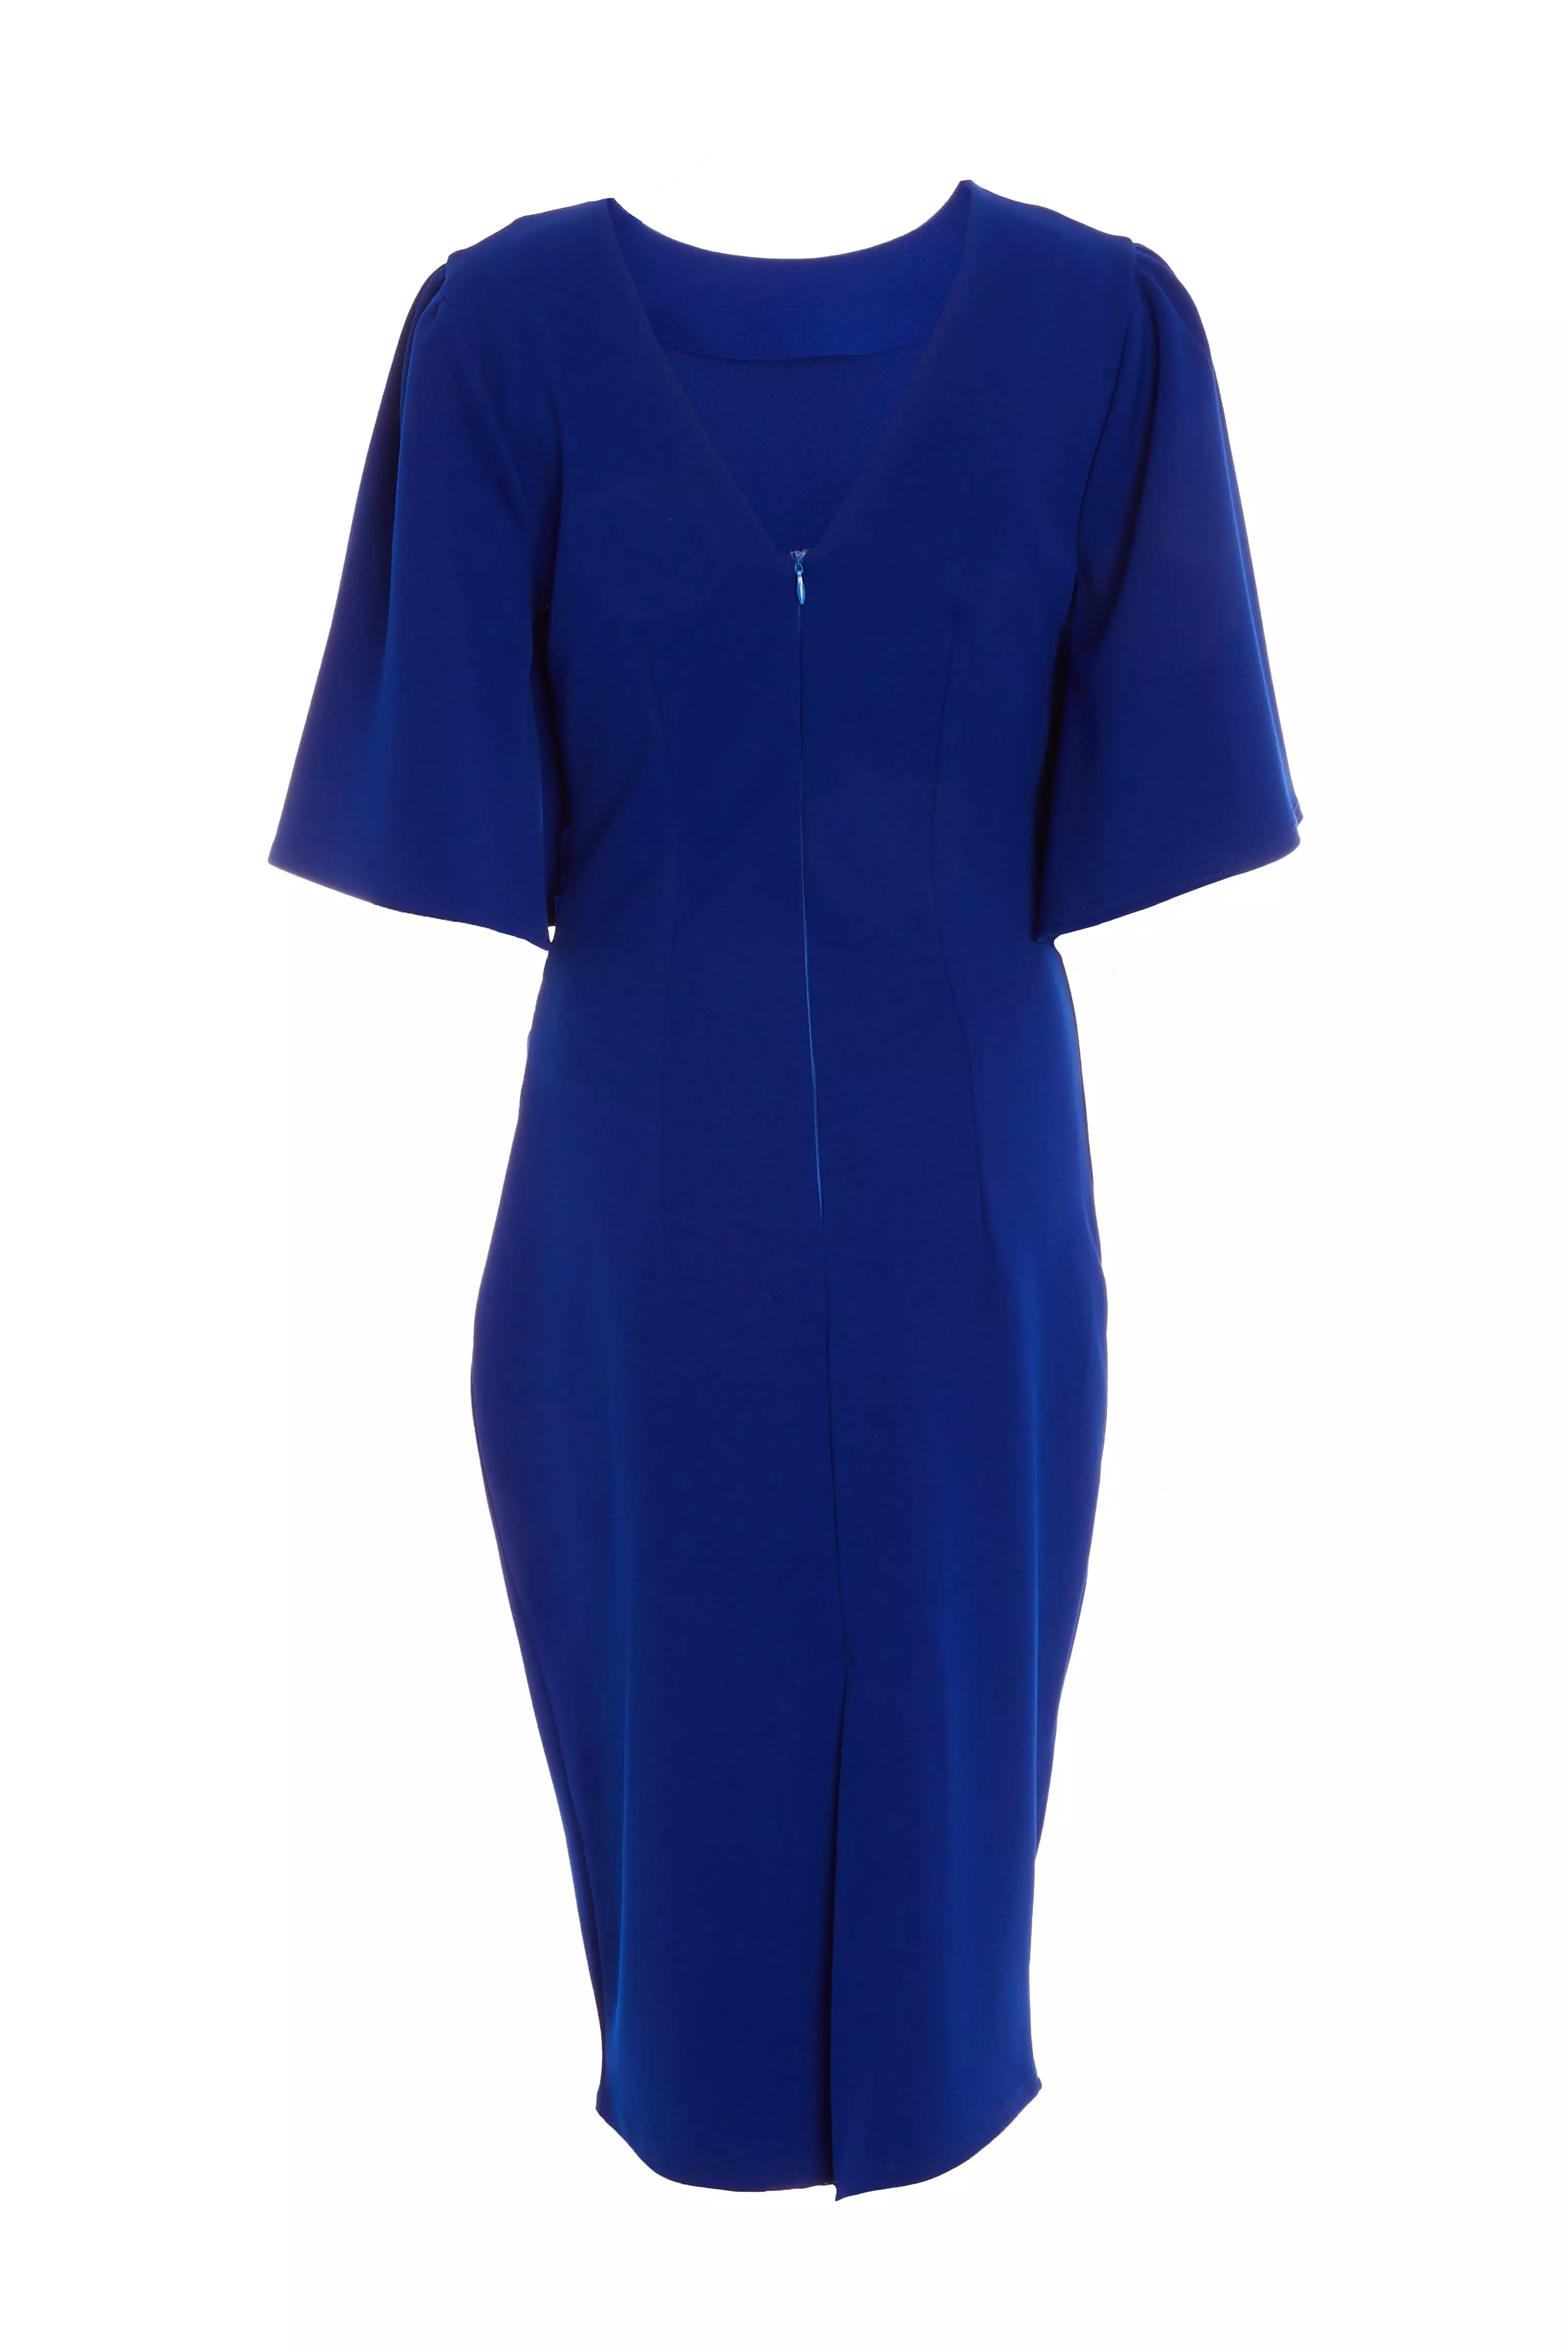 Blue Half Sleeve Midi Dress - QUIZ Clothing